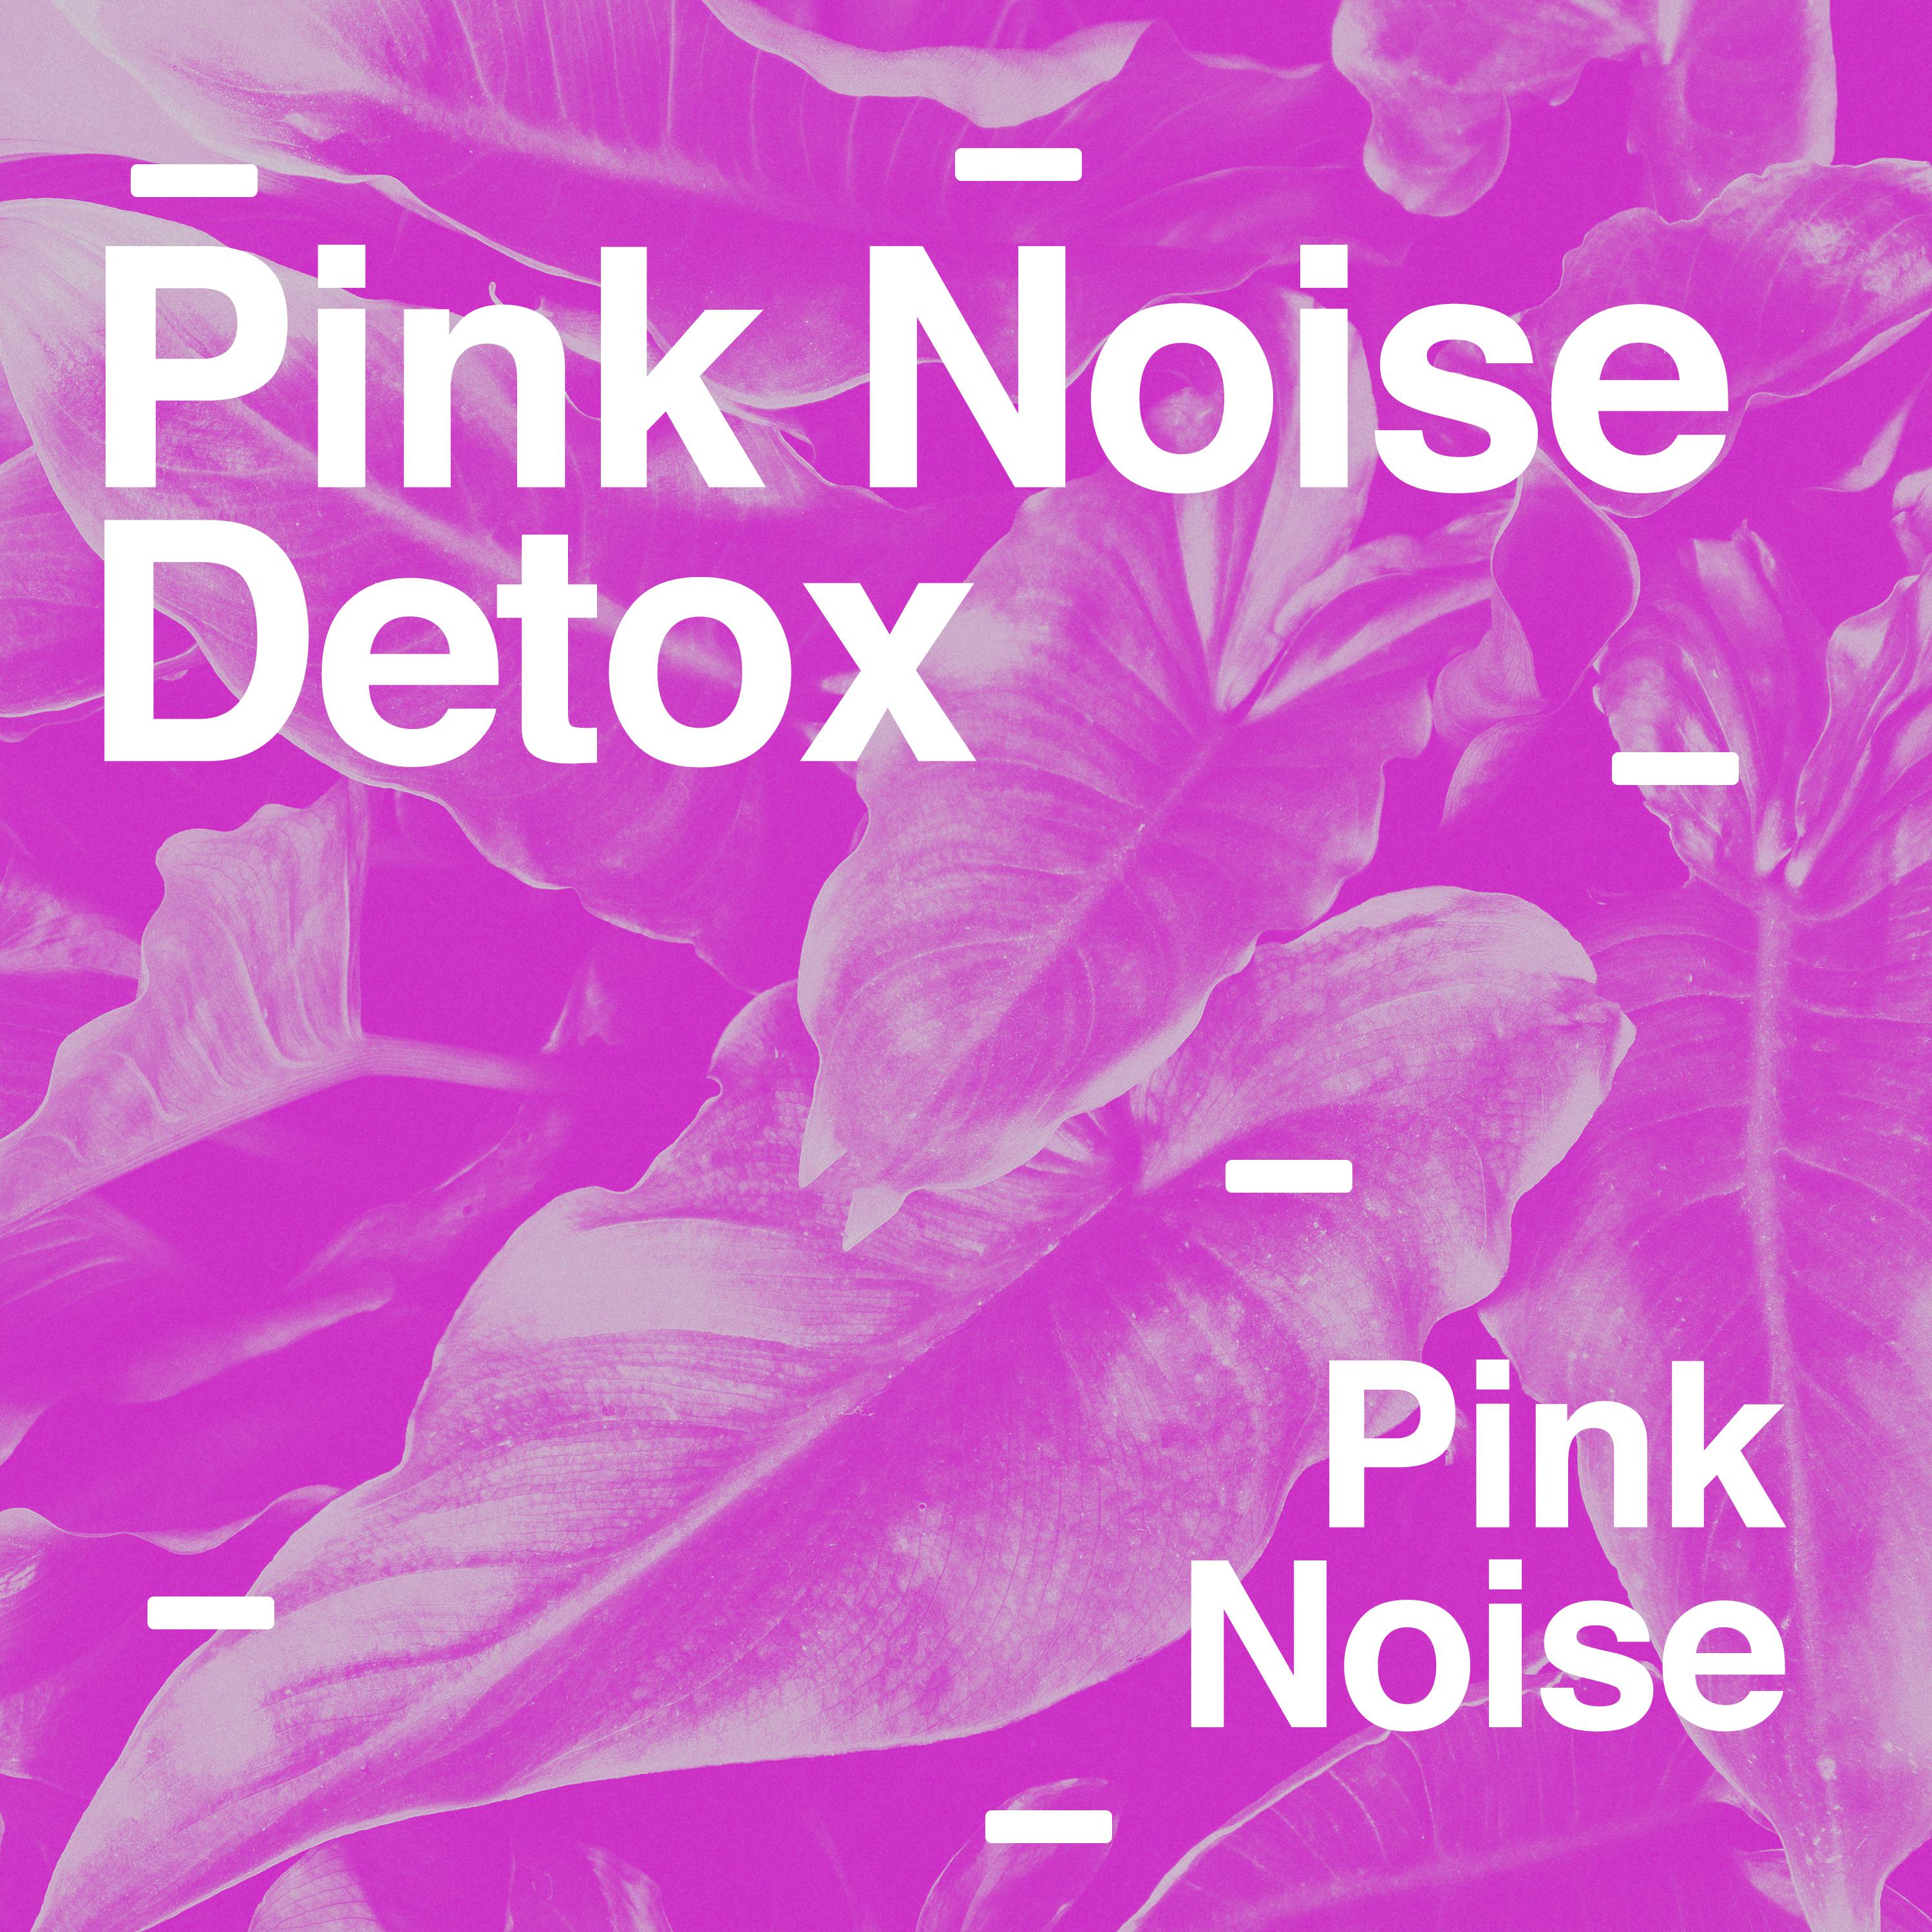 Pink Noise Detox